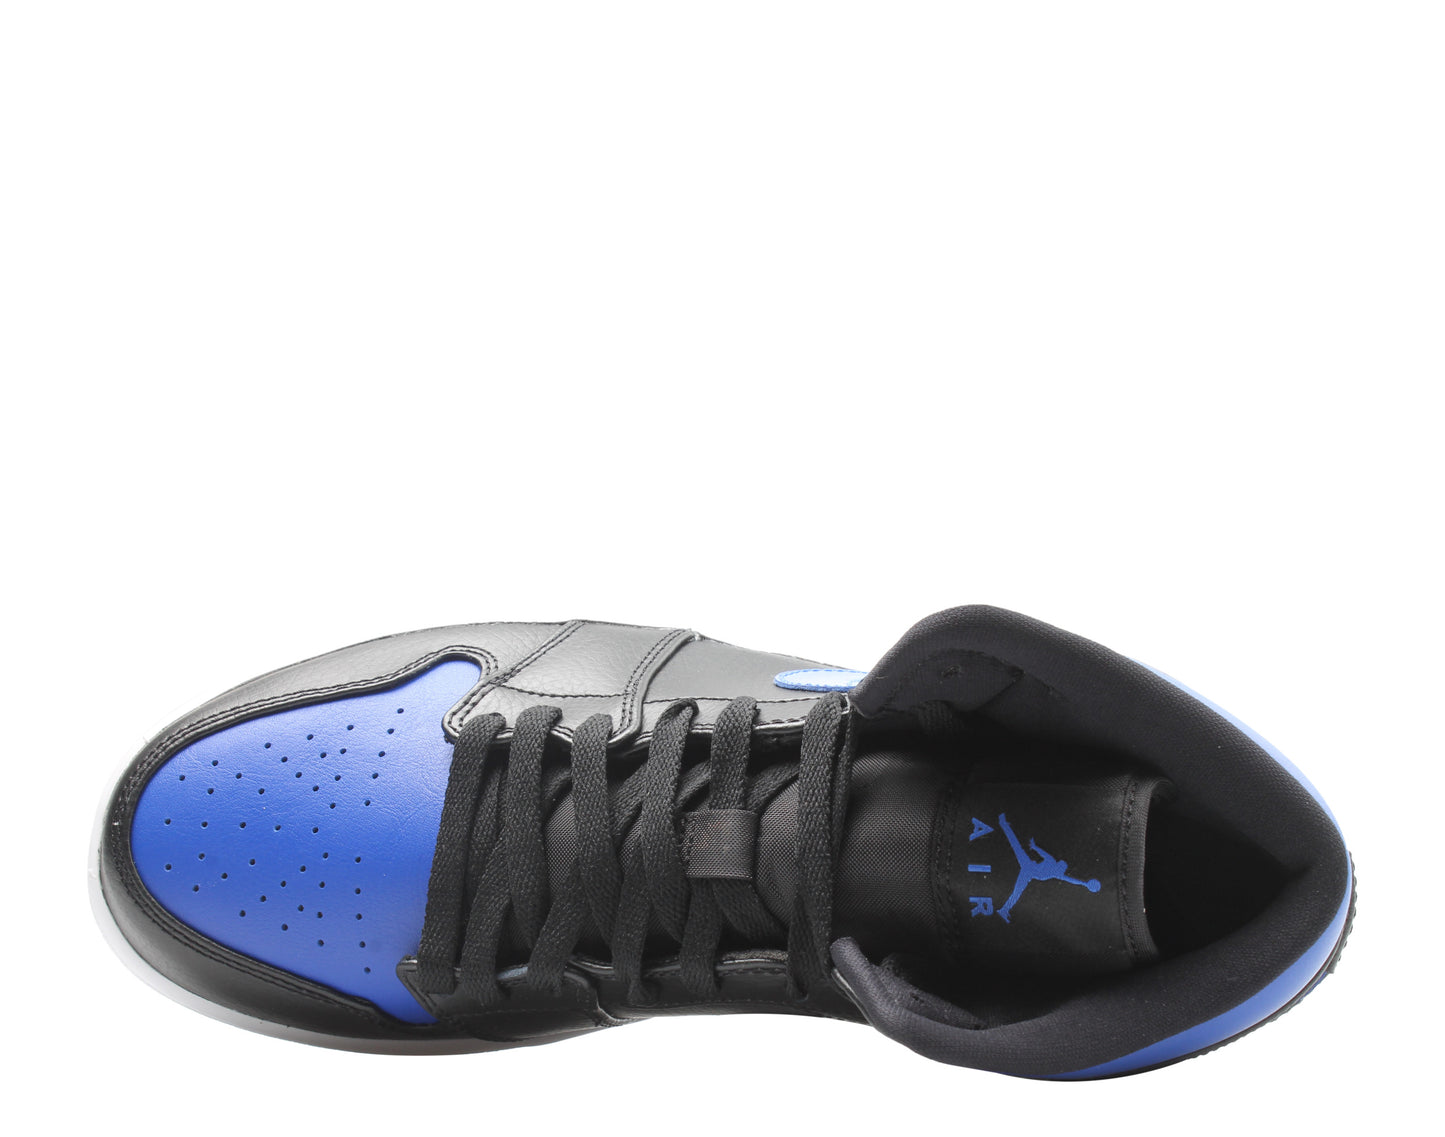 Nike Air Jordan 1 Mid Black/Hyper Royal-White Men's Basketball Shoes 554724-068